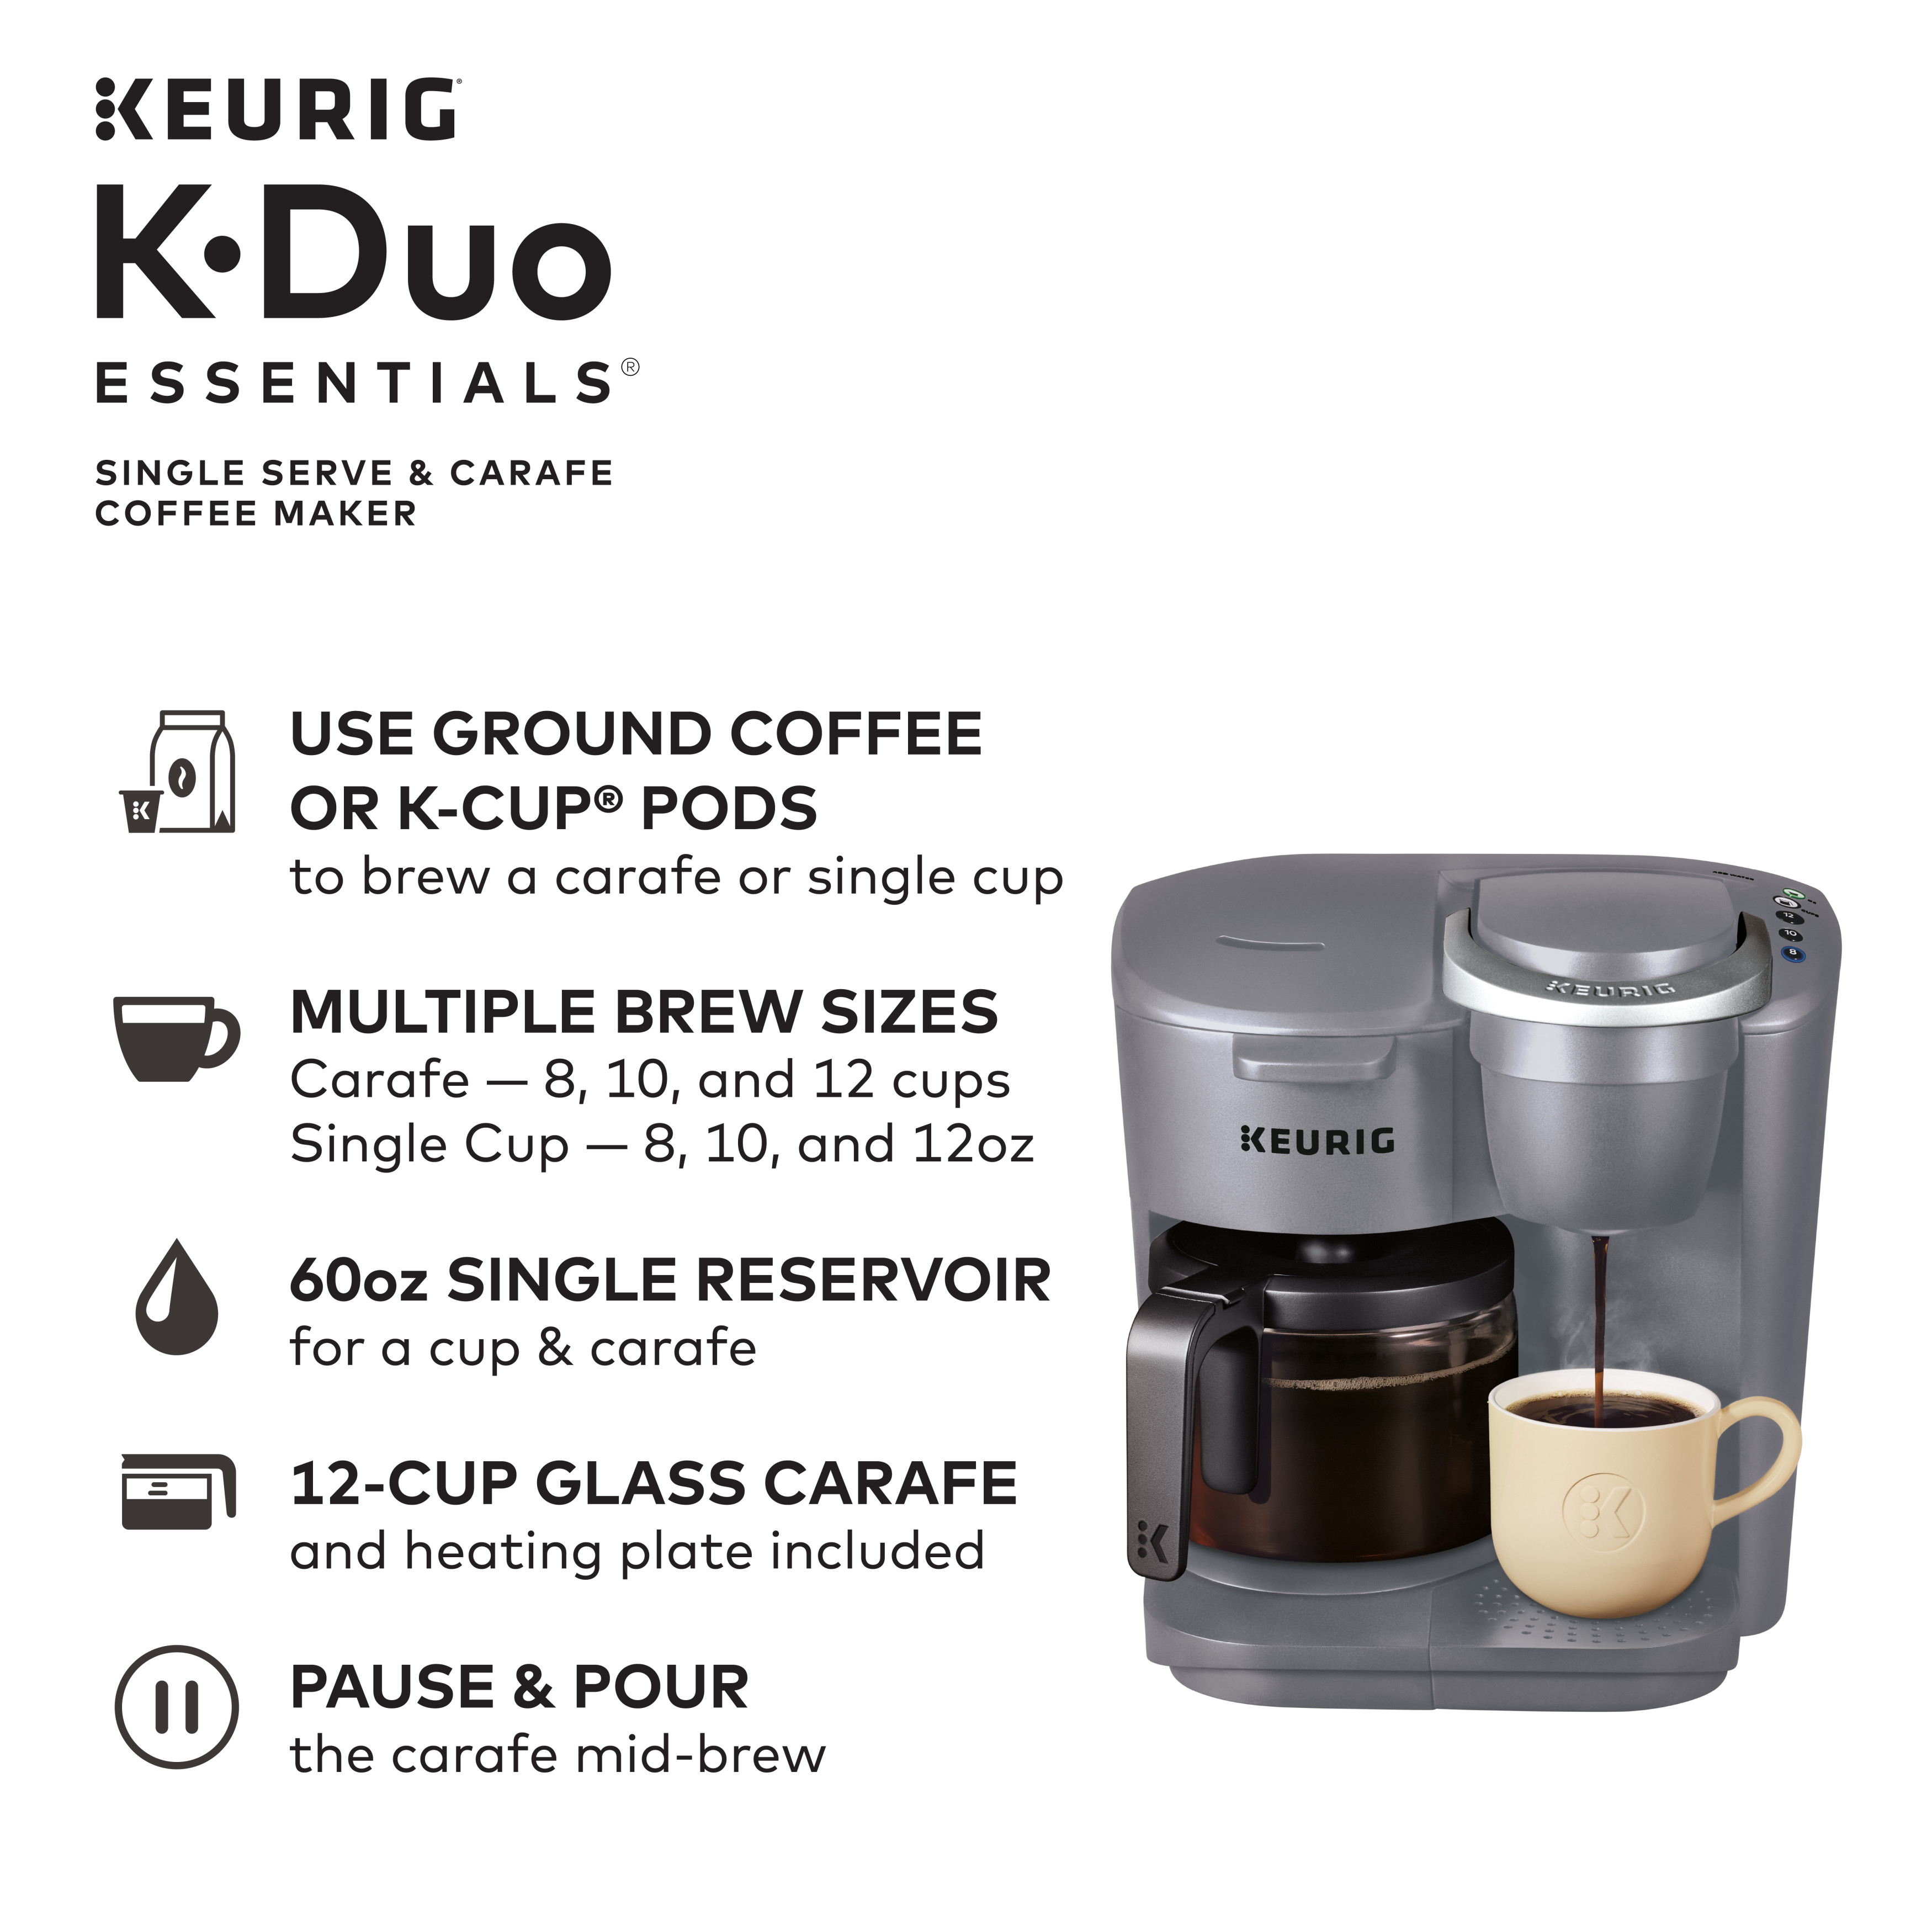 Keurig K-Duo Essentials Moonlight Gray Single-Serve K-Cup Coffee Maker - image 3 of 12